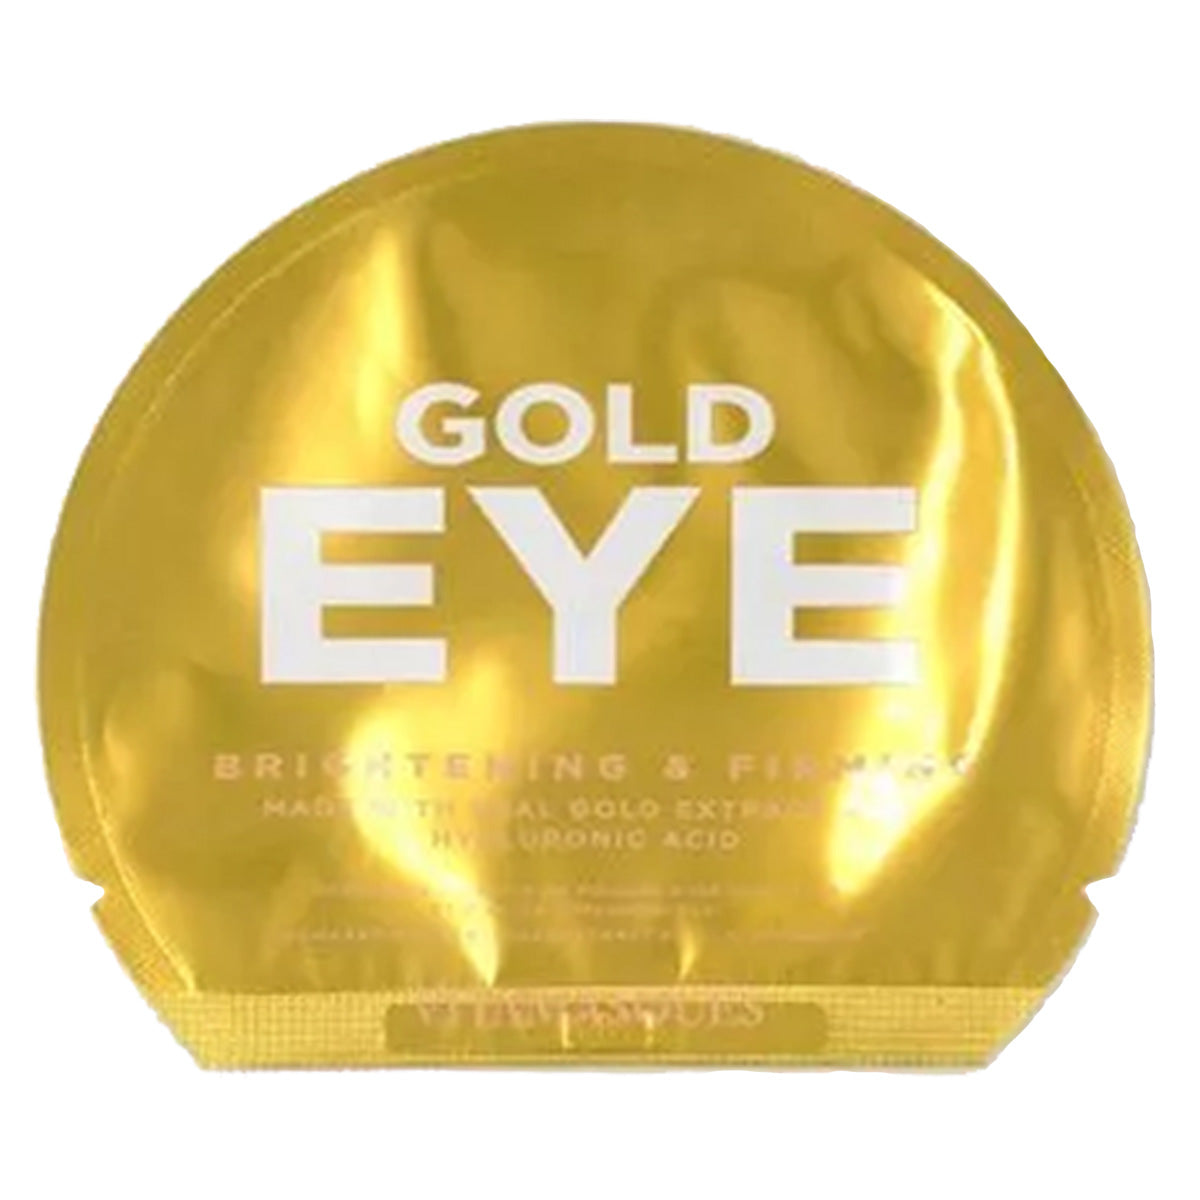 Vitamasques gold eye pads